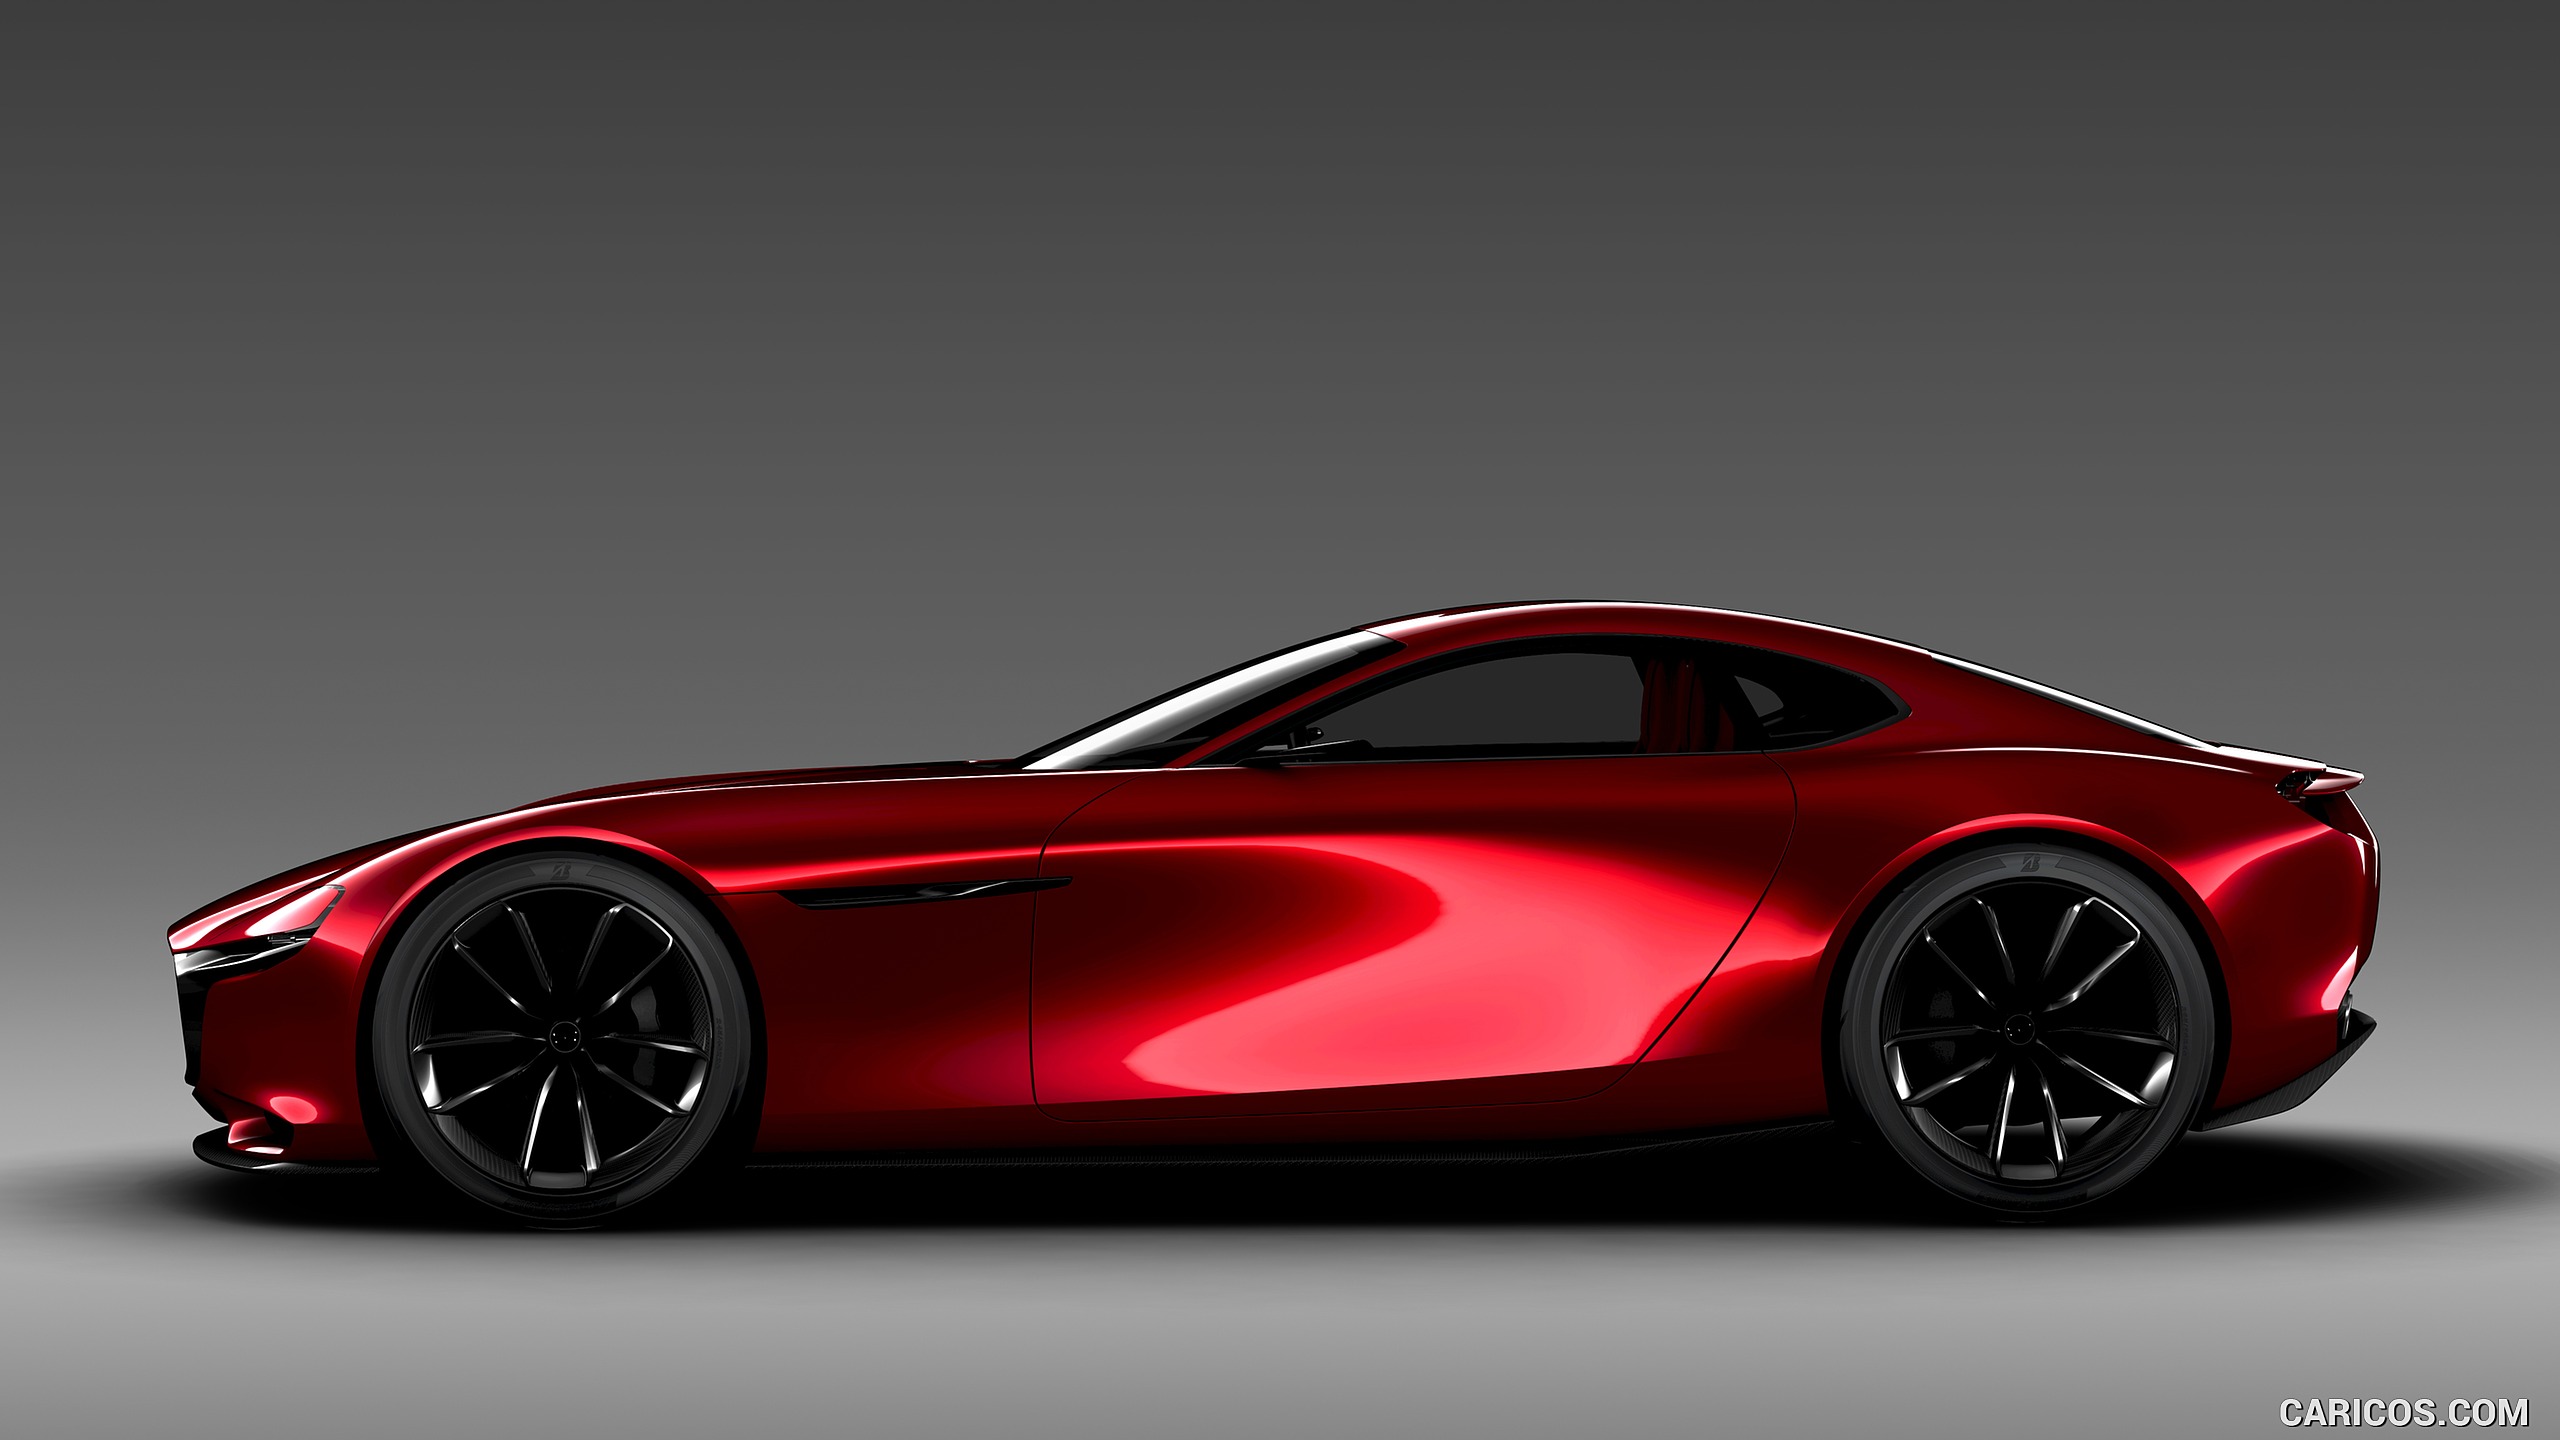 2015 Mazda RX-VISION Concept - Side, #13 of 16